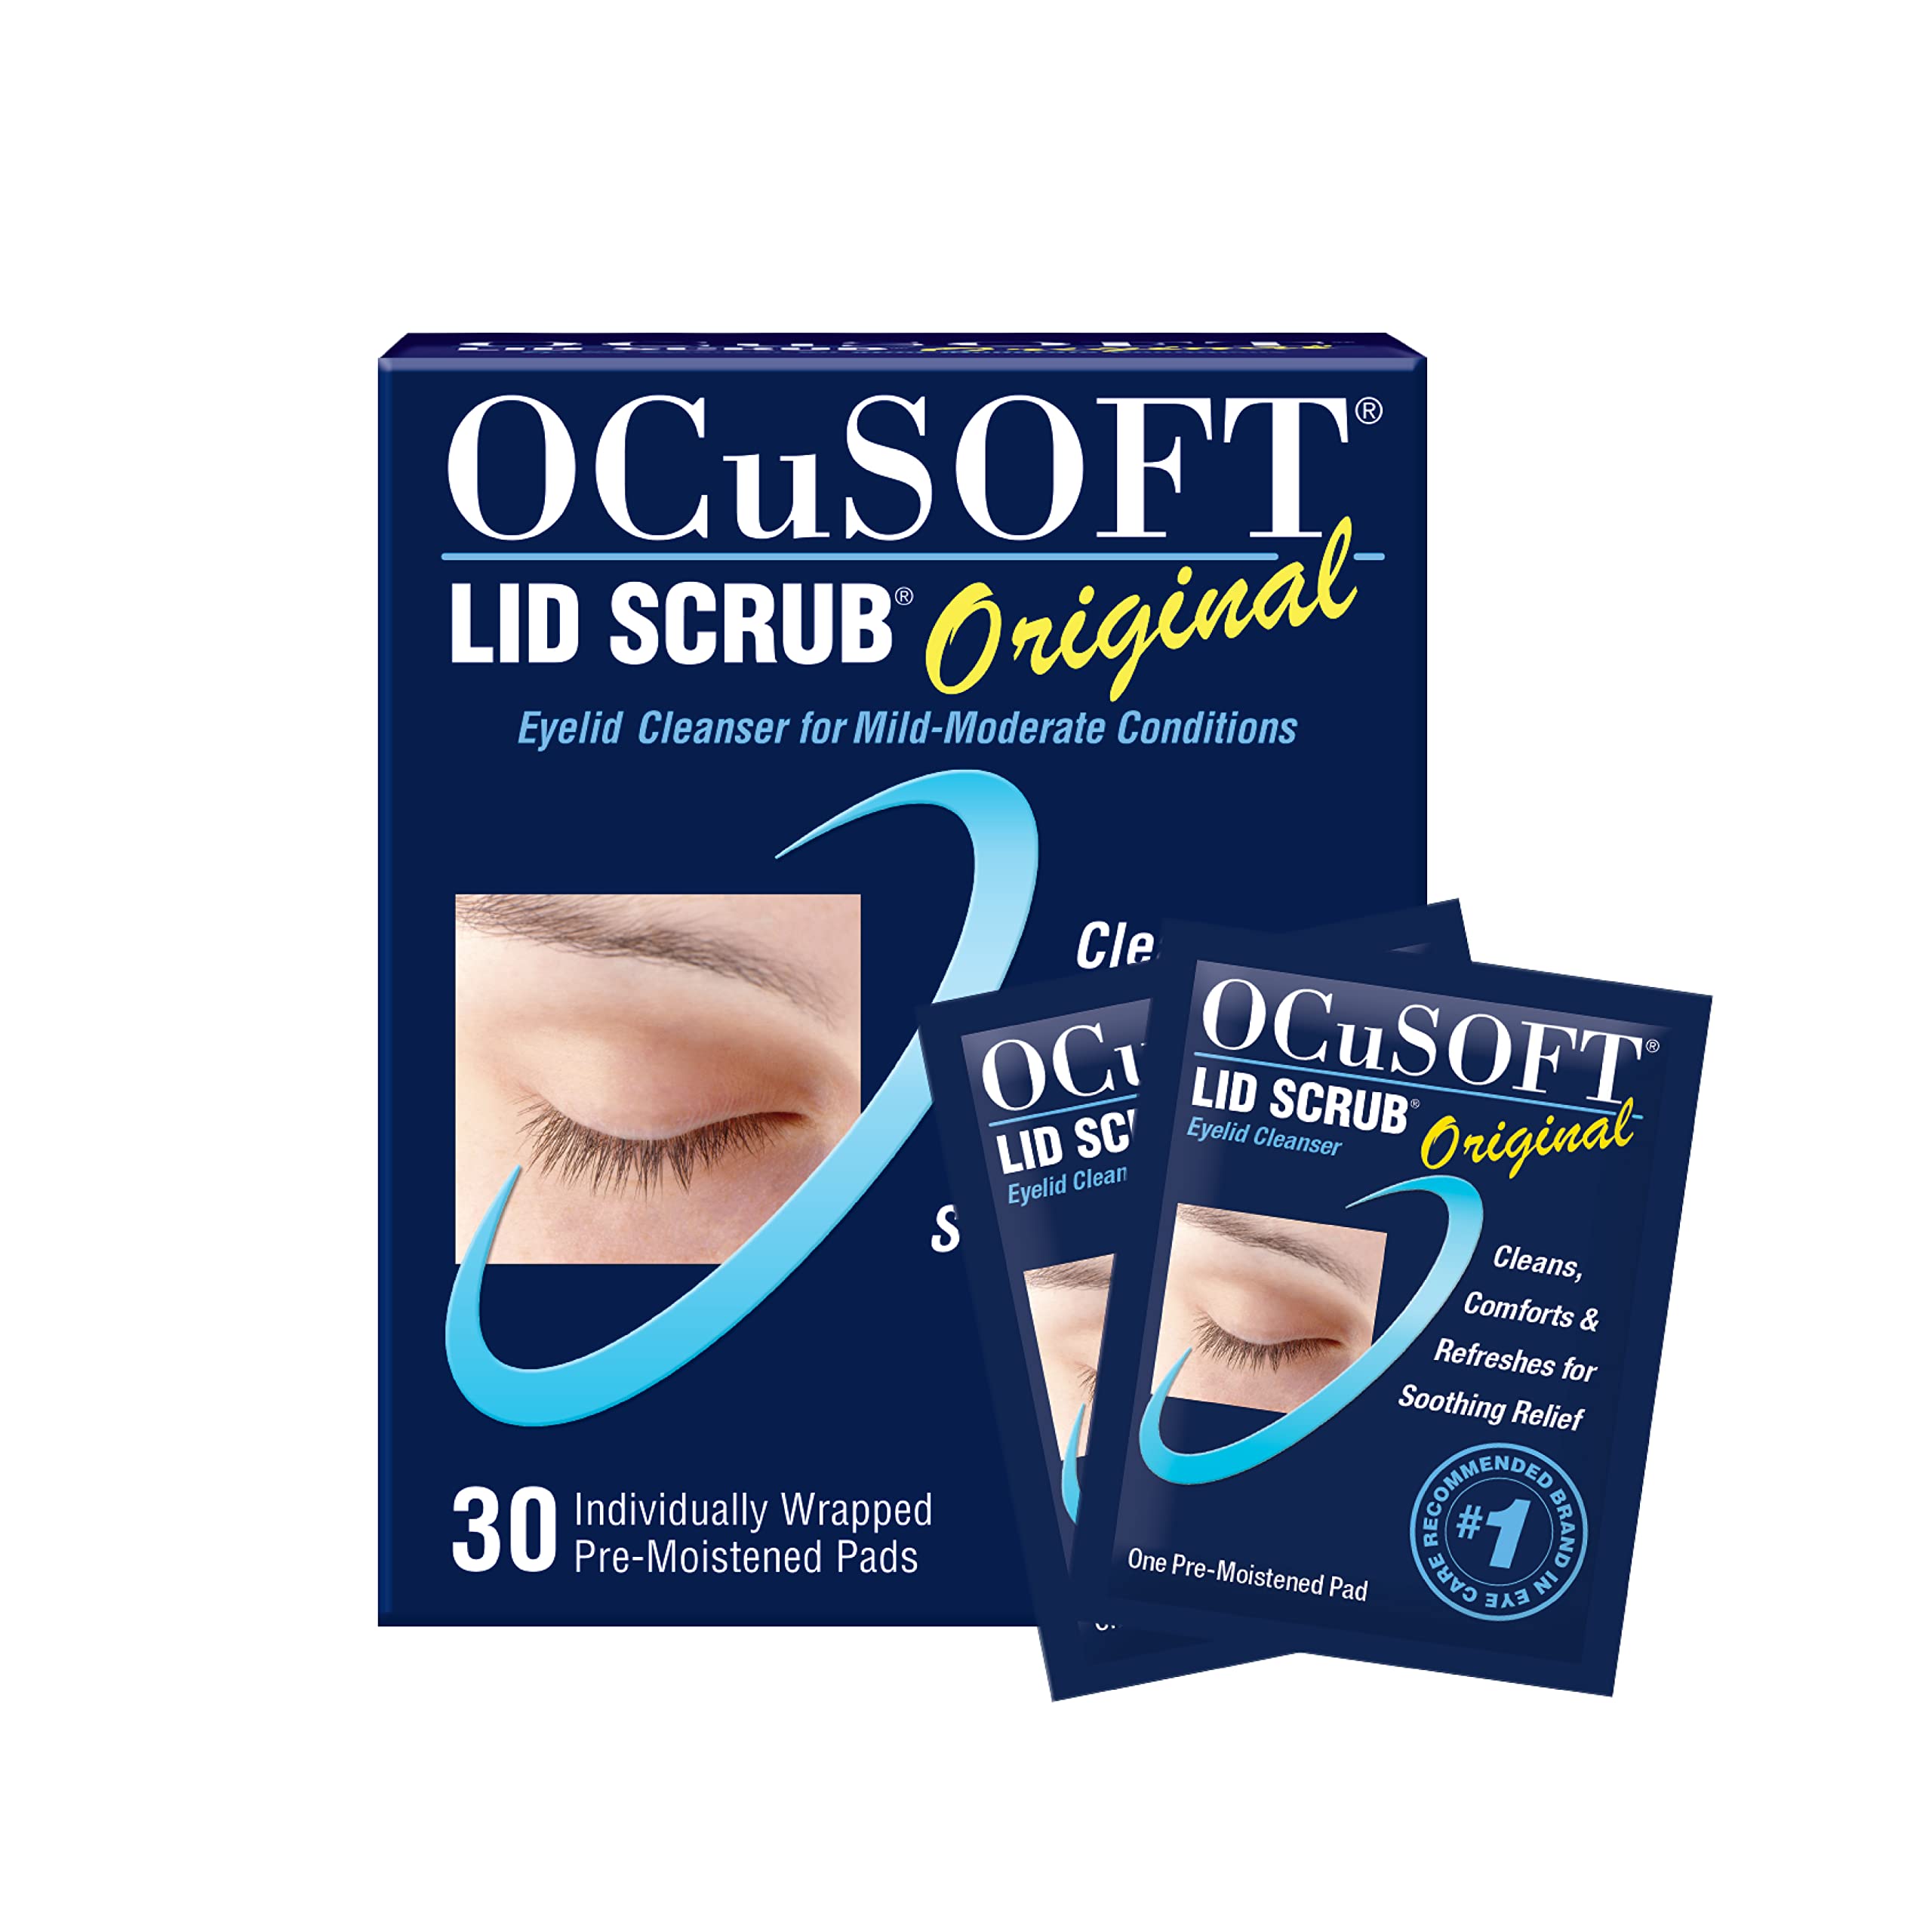 OCuSOFT Cleansing Lid Scrub Original, Pre-Moistened Pads, 30 Count